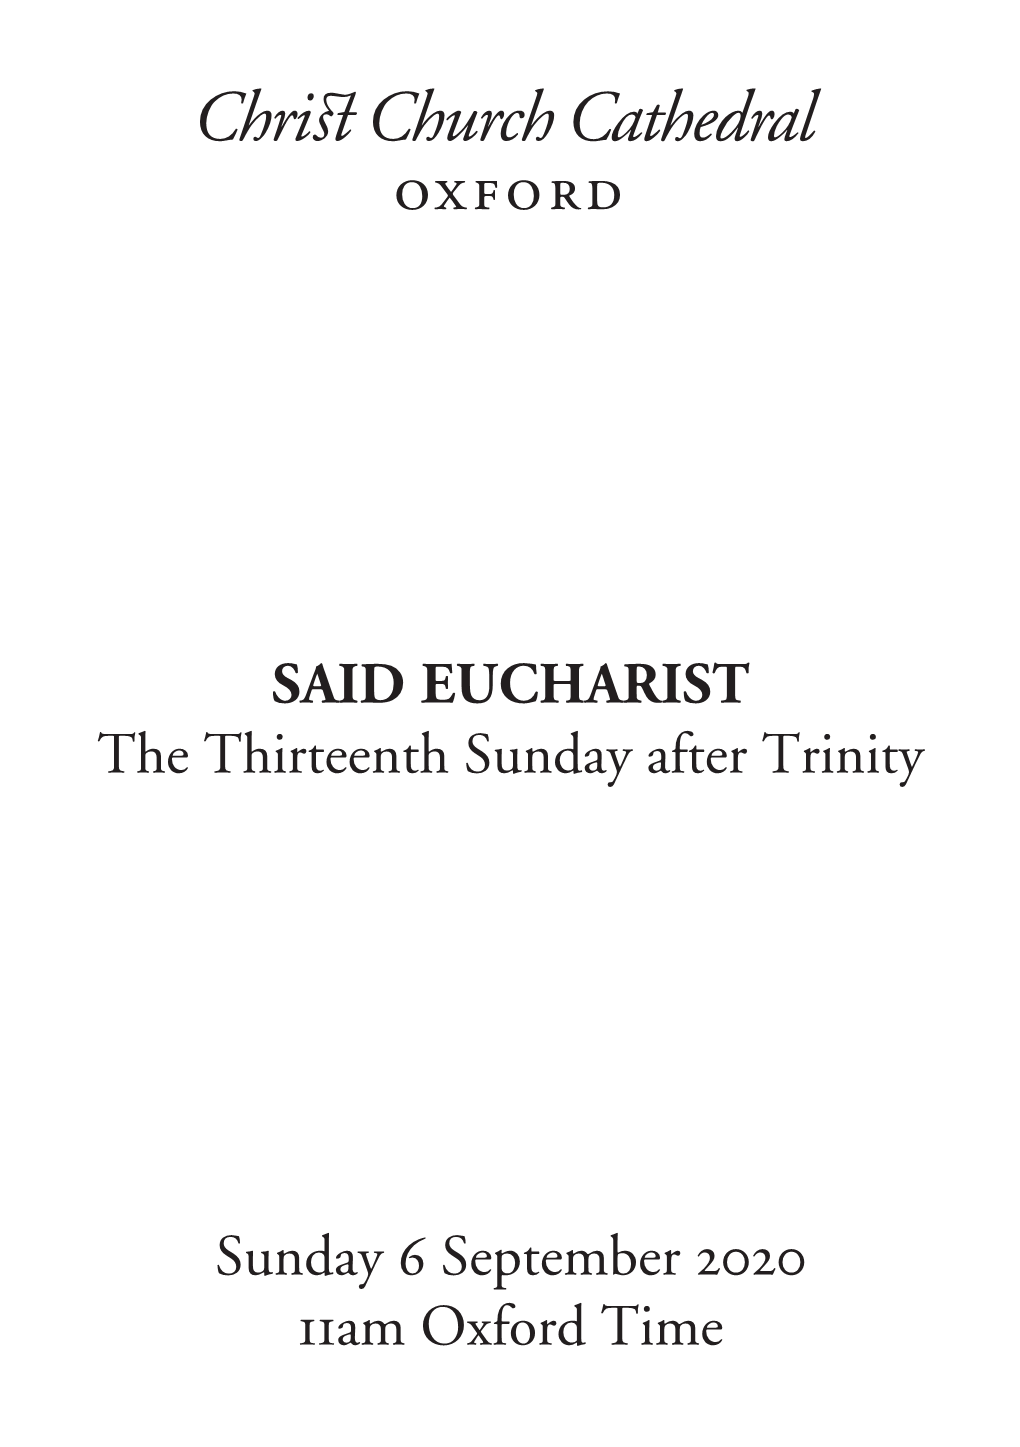 6 September 2020 Said Eucharist